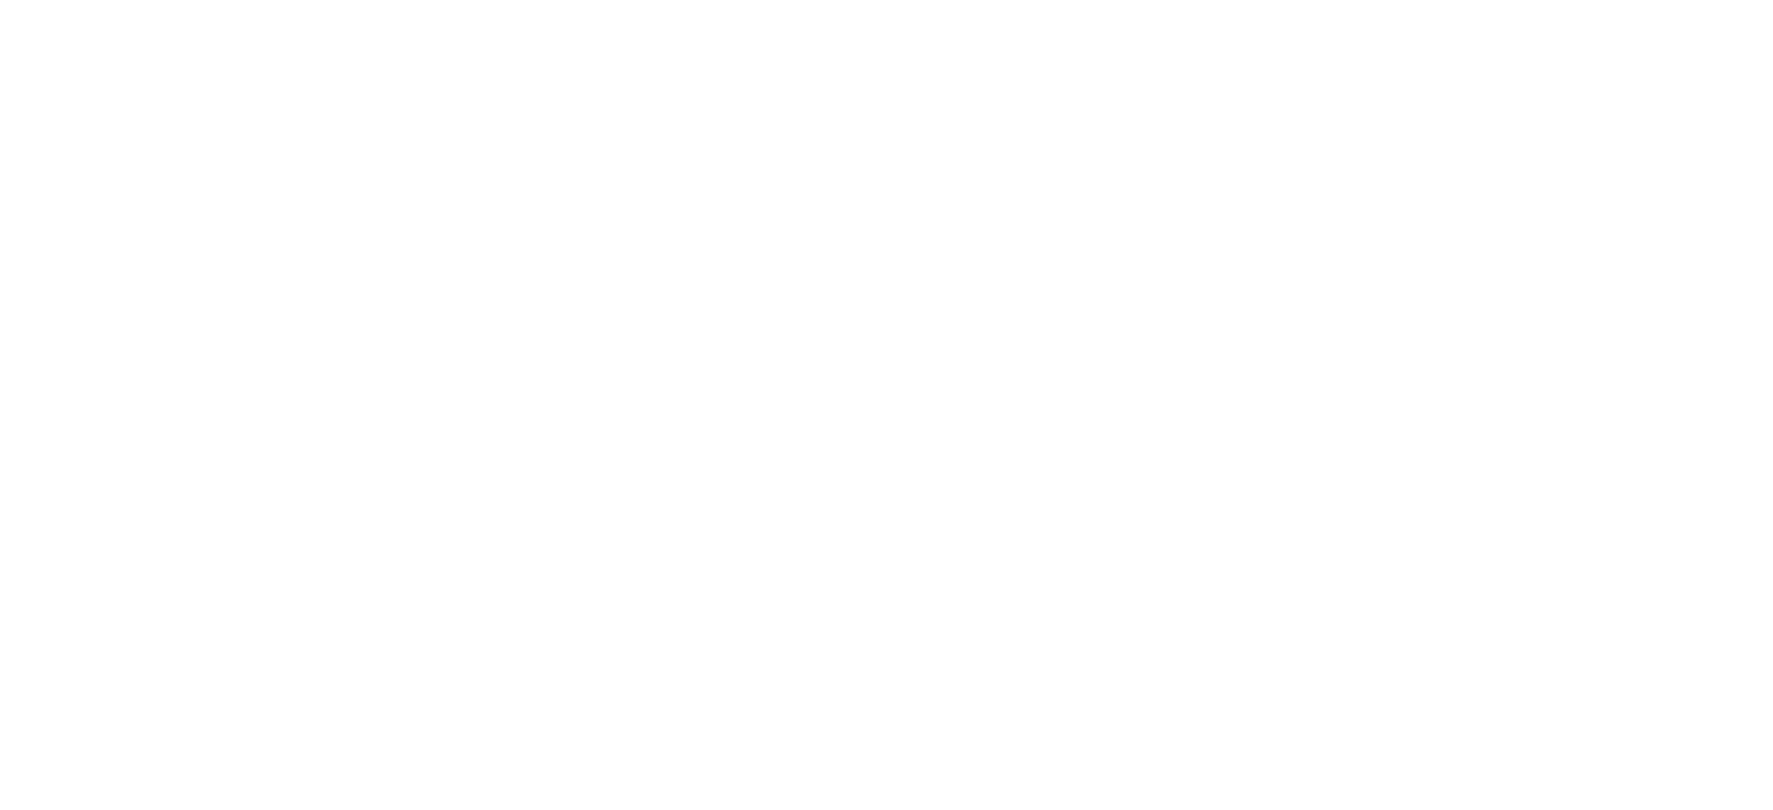 The Ibiza Weekender logo